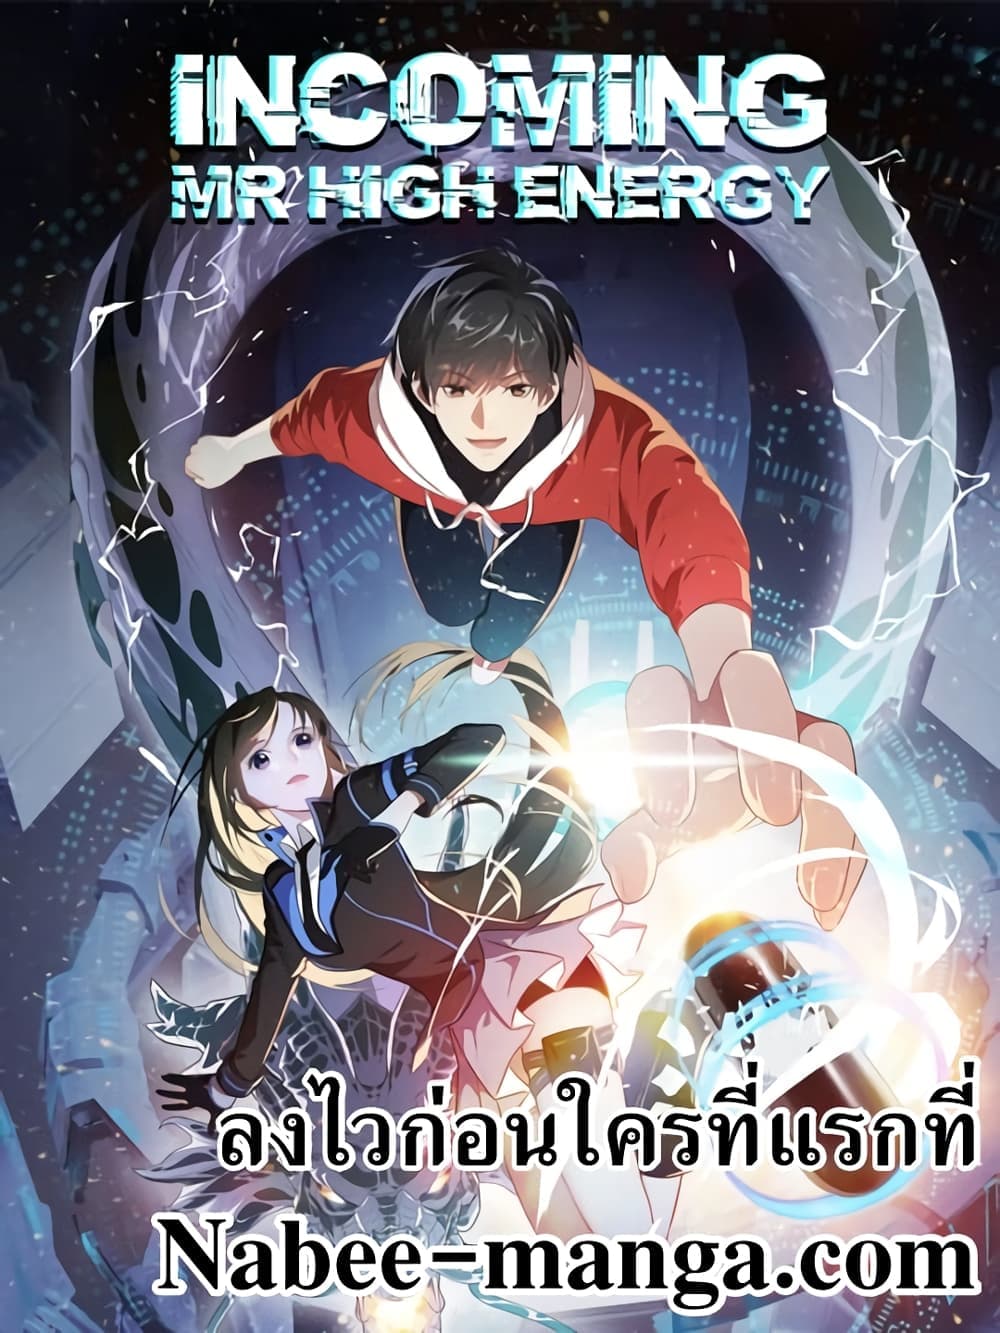 High Energy Strikes à¸à¸­à¸à¸à¸µà¹ 239 (1)